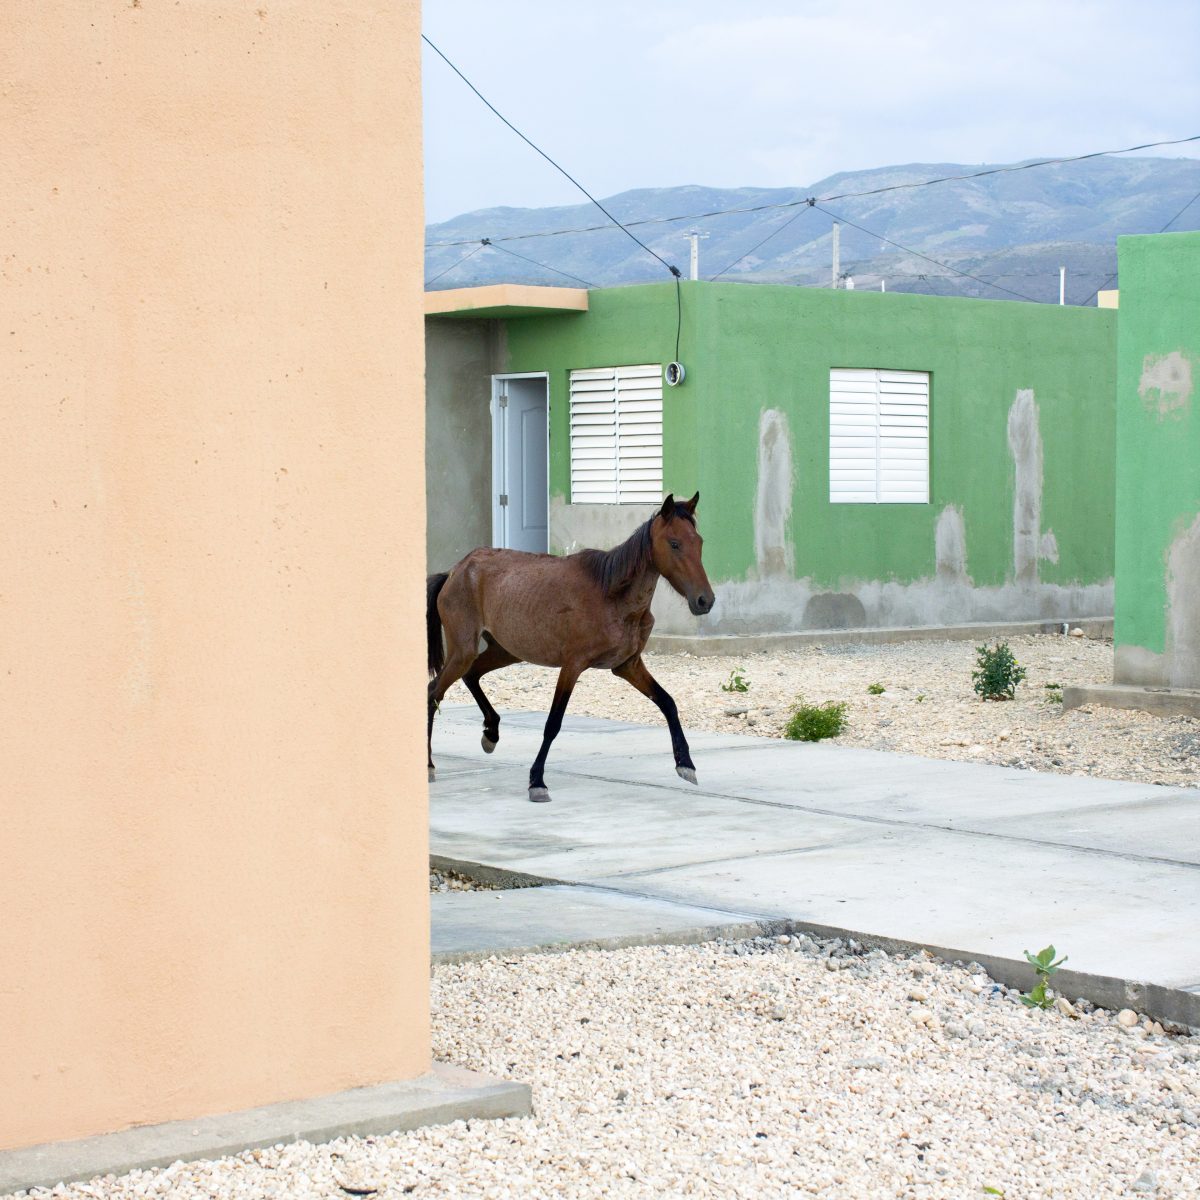 Extrait de "Haïti", © Corentin Fohlen | Texte : Marie Moglia